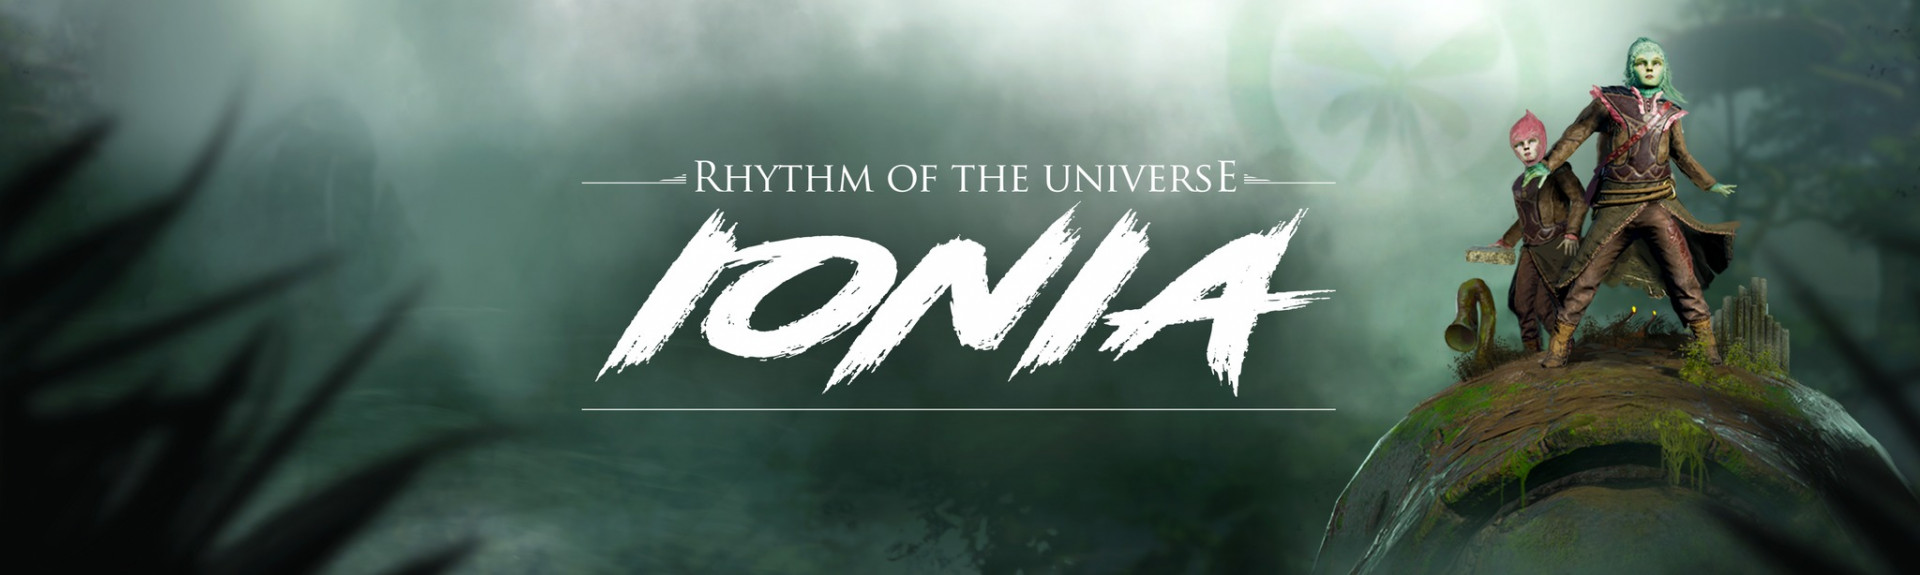 Rhythm of the Universe - Ionia